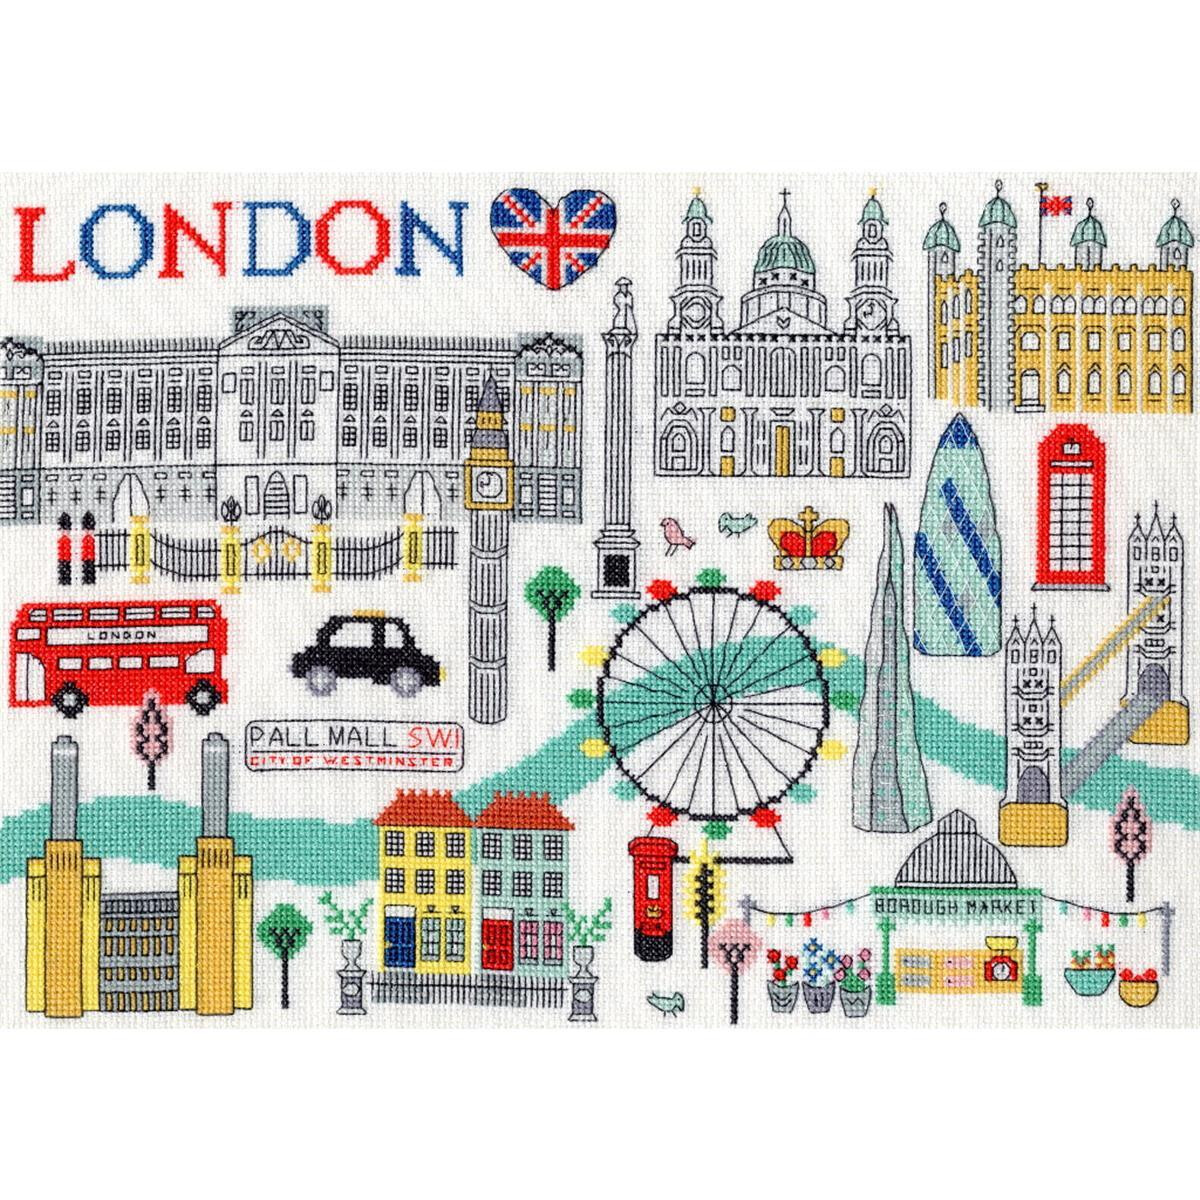 Illustration ludique des symboles londoniens tels que...